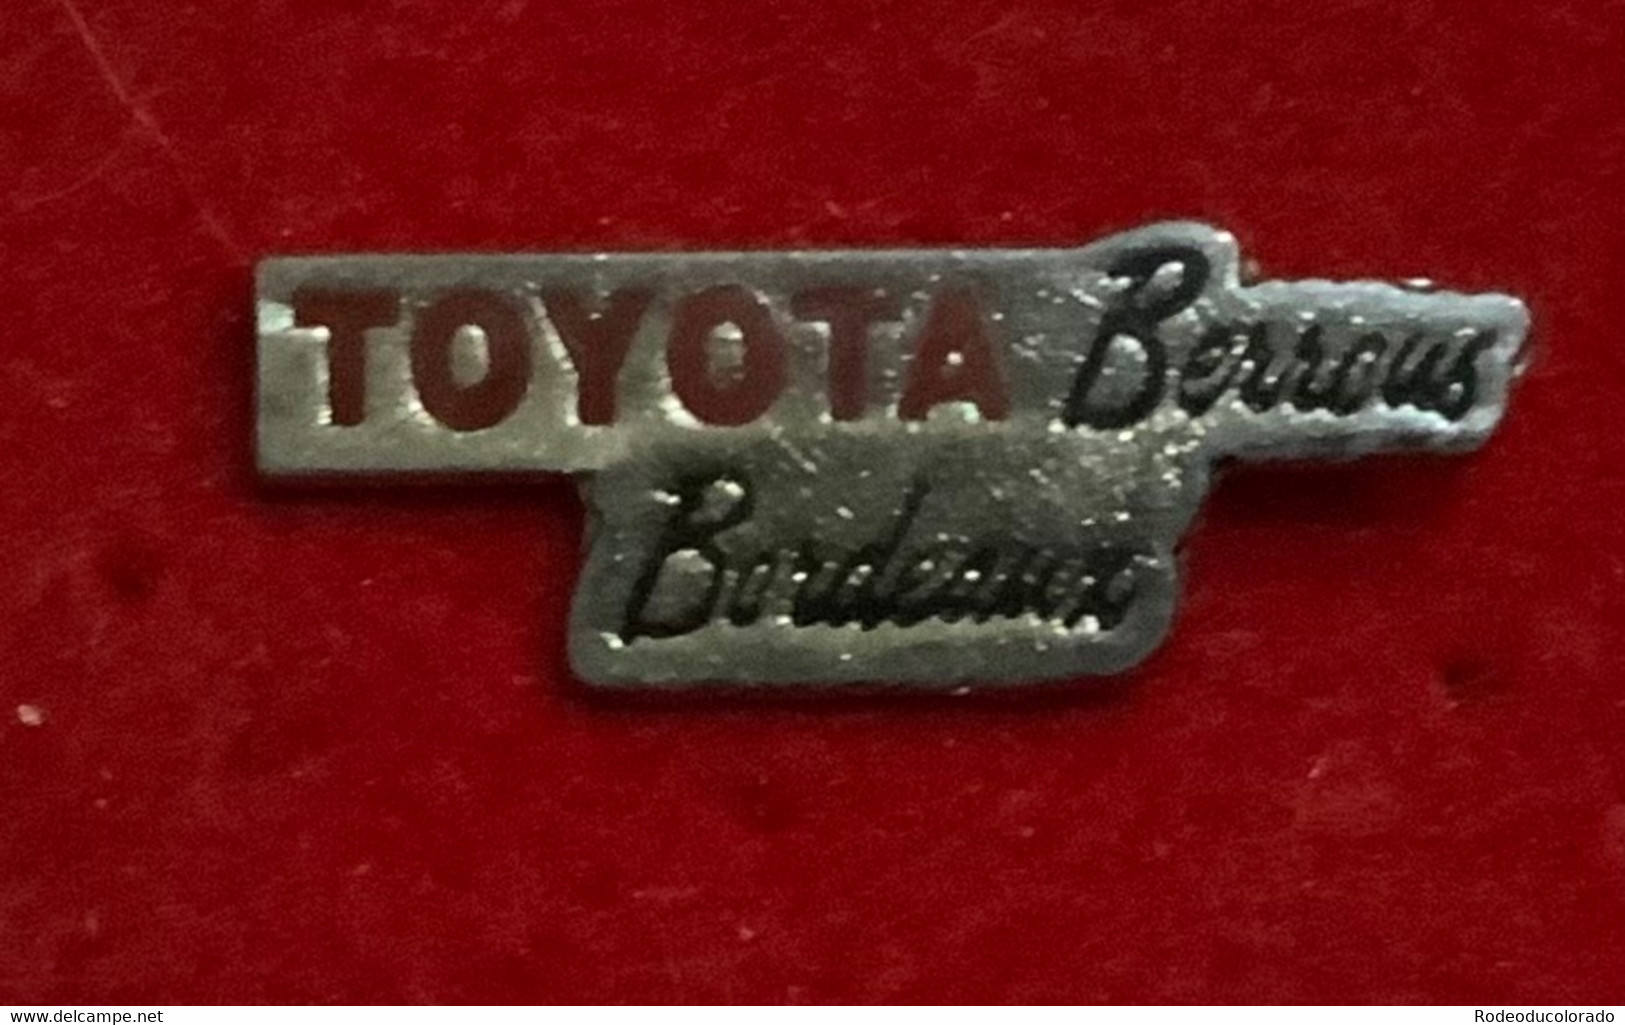 TOYOTA BERROUS BORDEAUX - Toyota